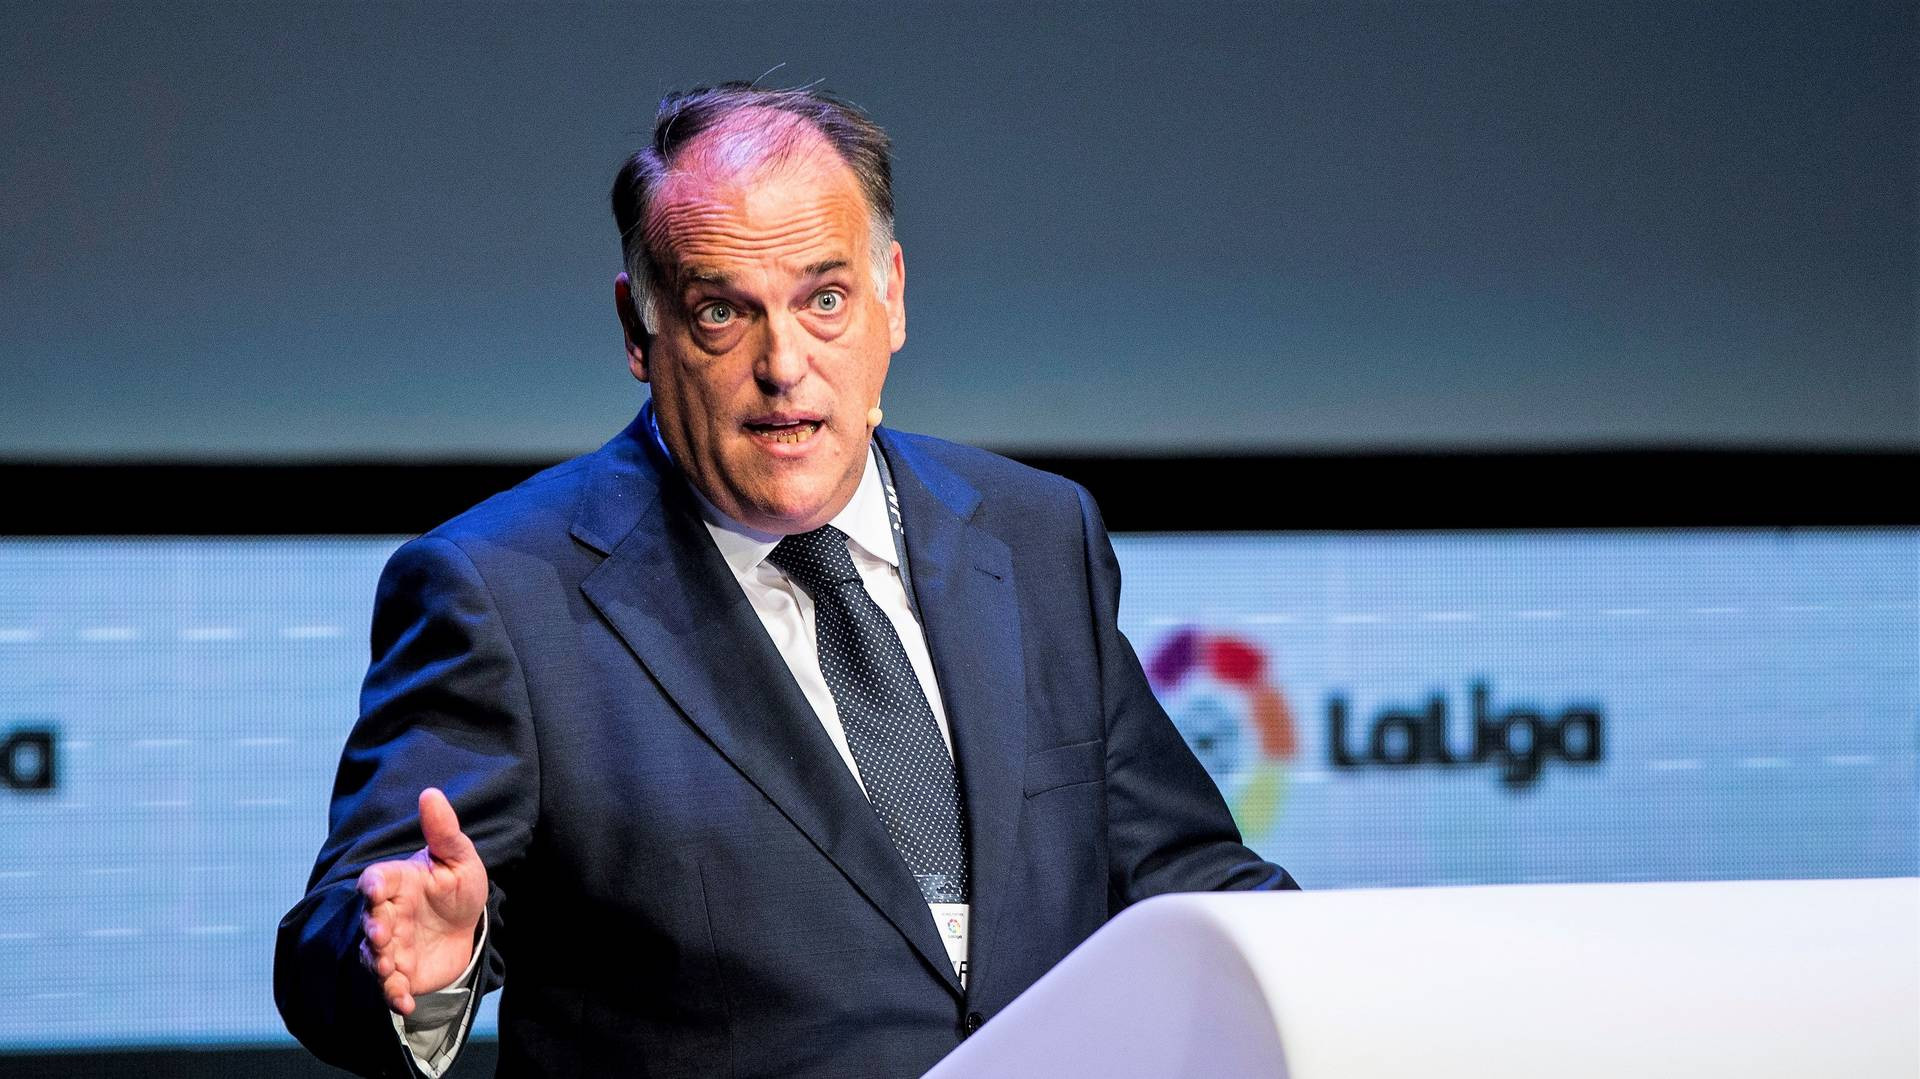 El presidente de la Liga de fútbol española, Javier Tebas / EFE